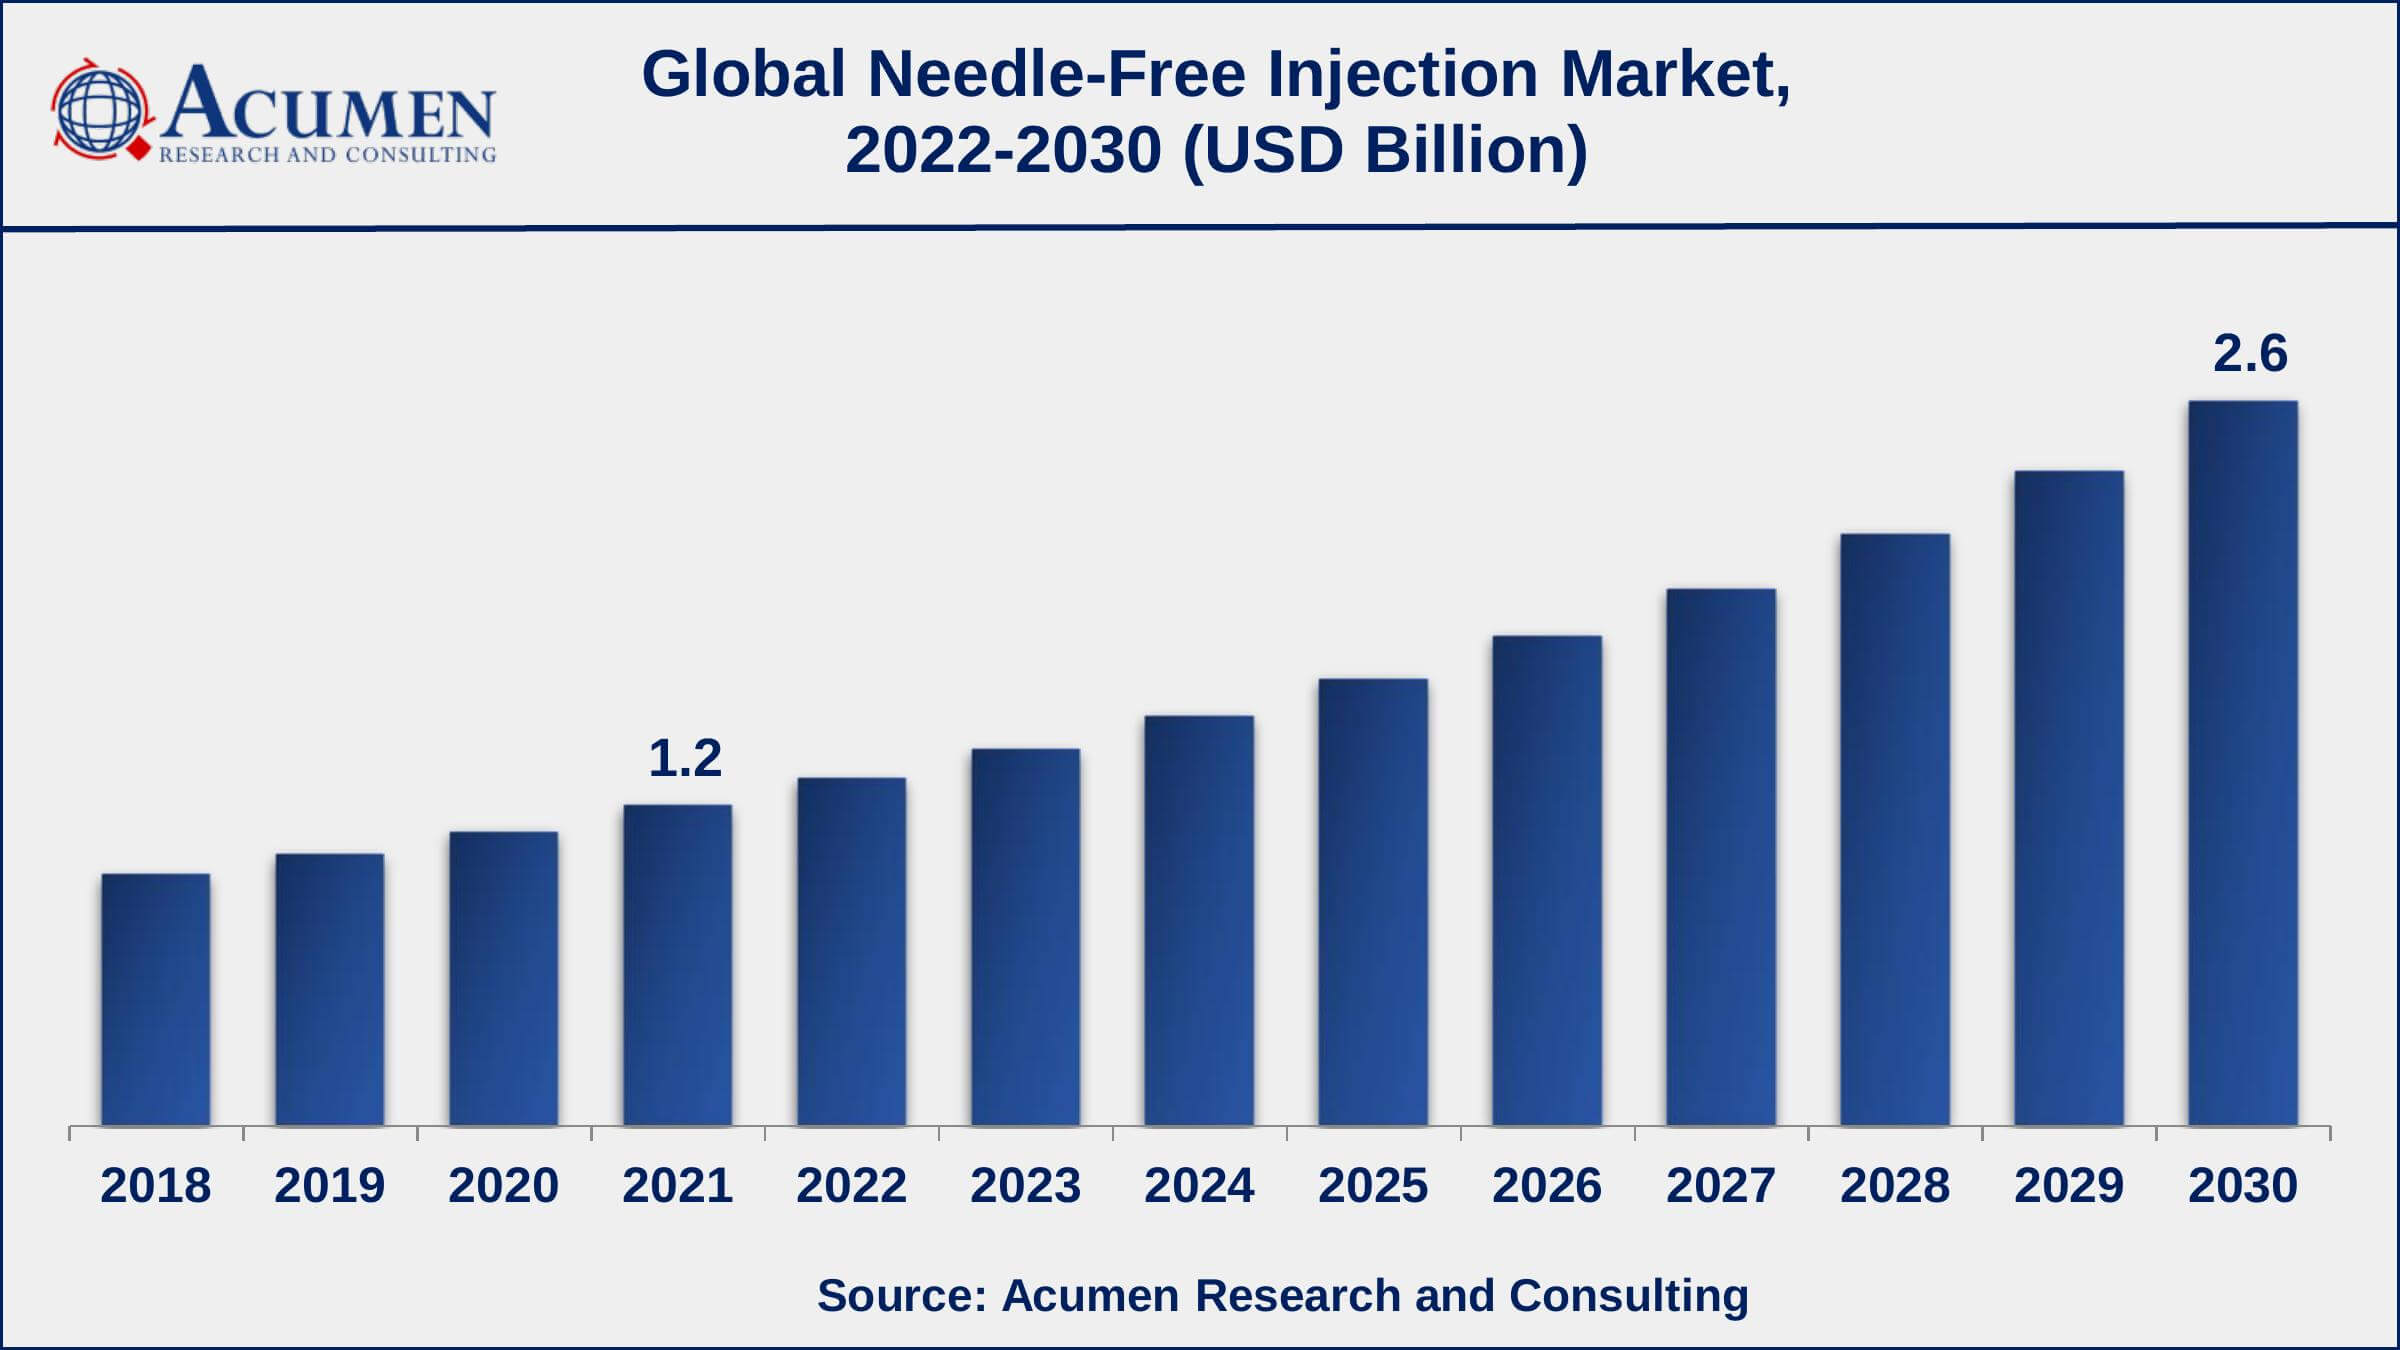 Global Needle Free Injection Market Dynamics